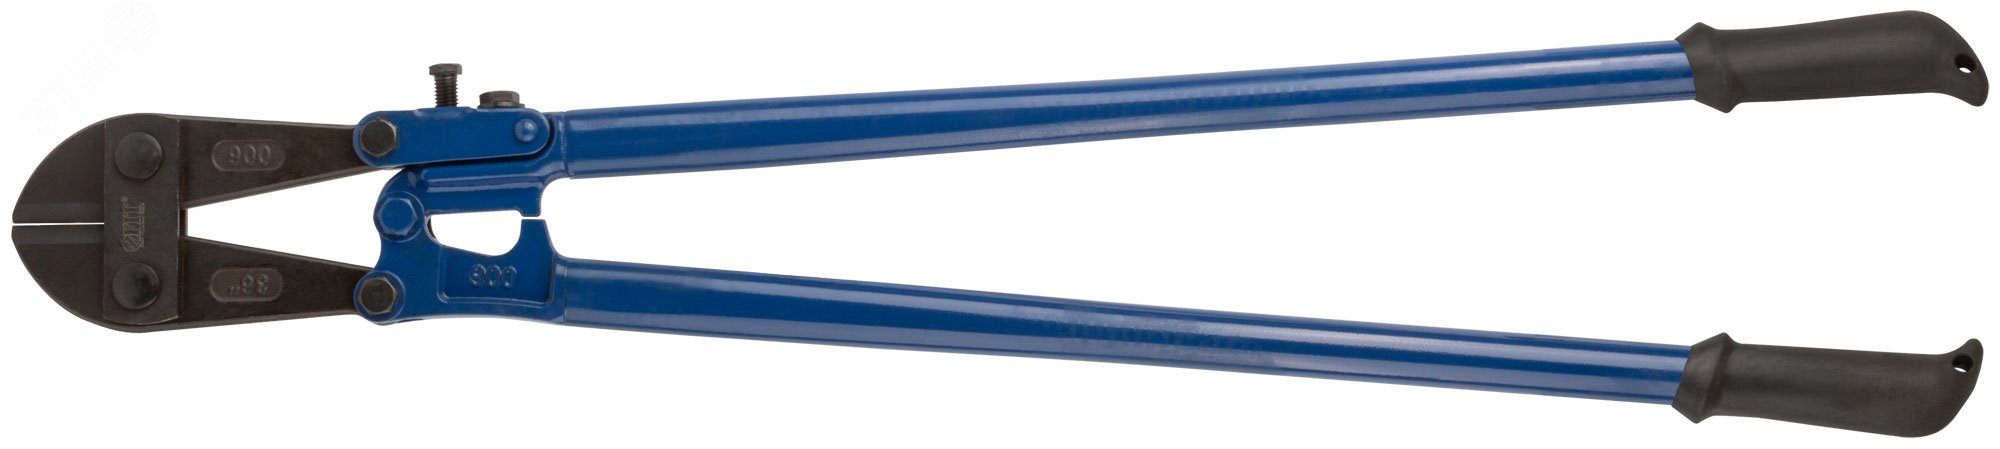 Болторез усиленный ''Профи'' HRC 58-59 (синий) 900 мм 41790 FIT - превью